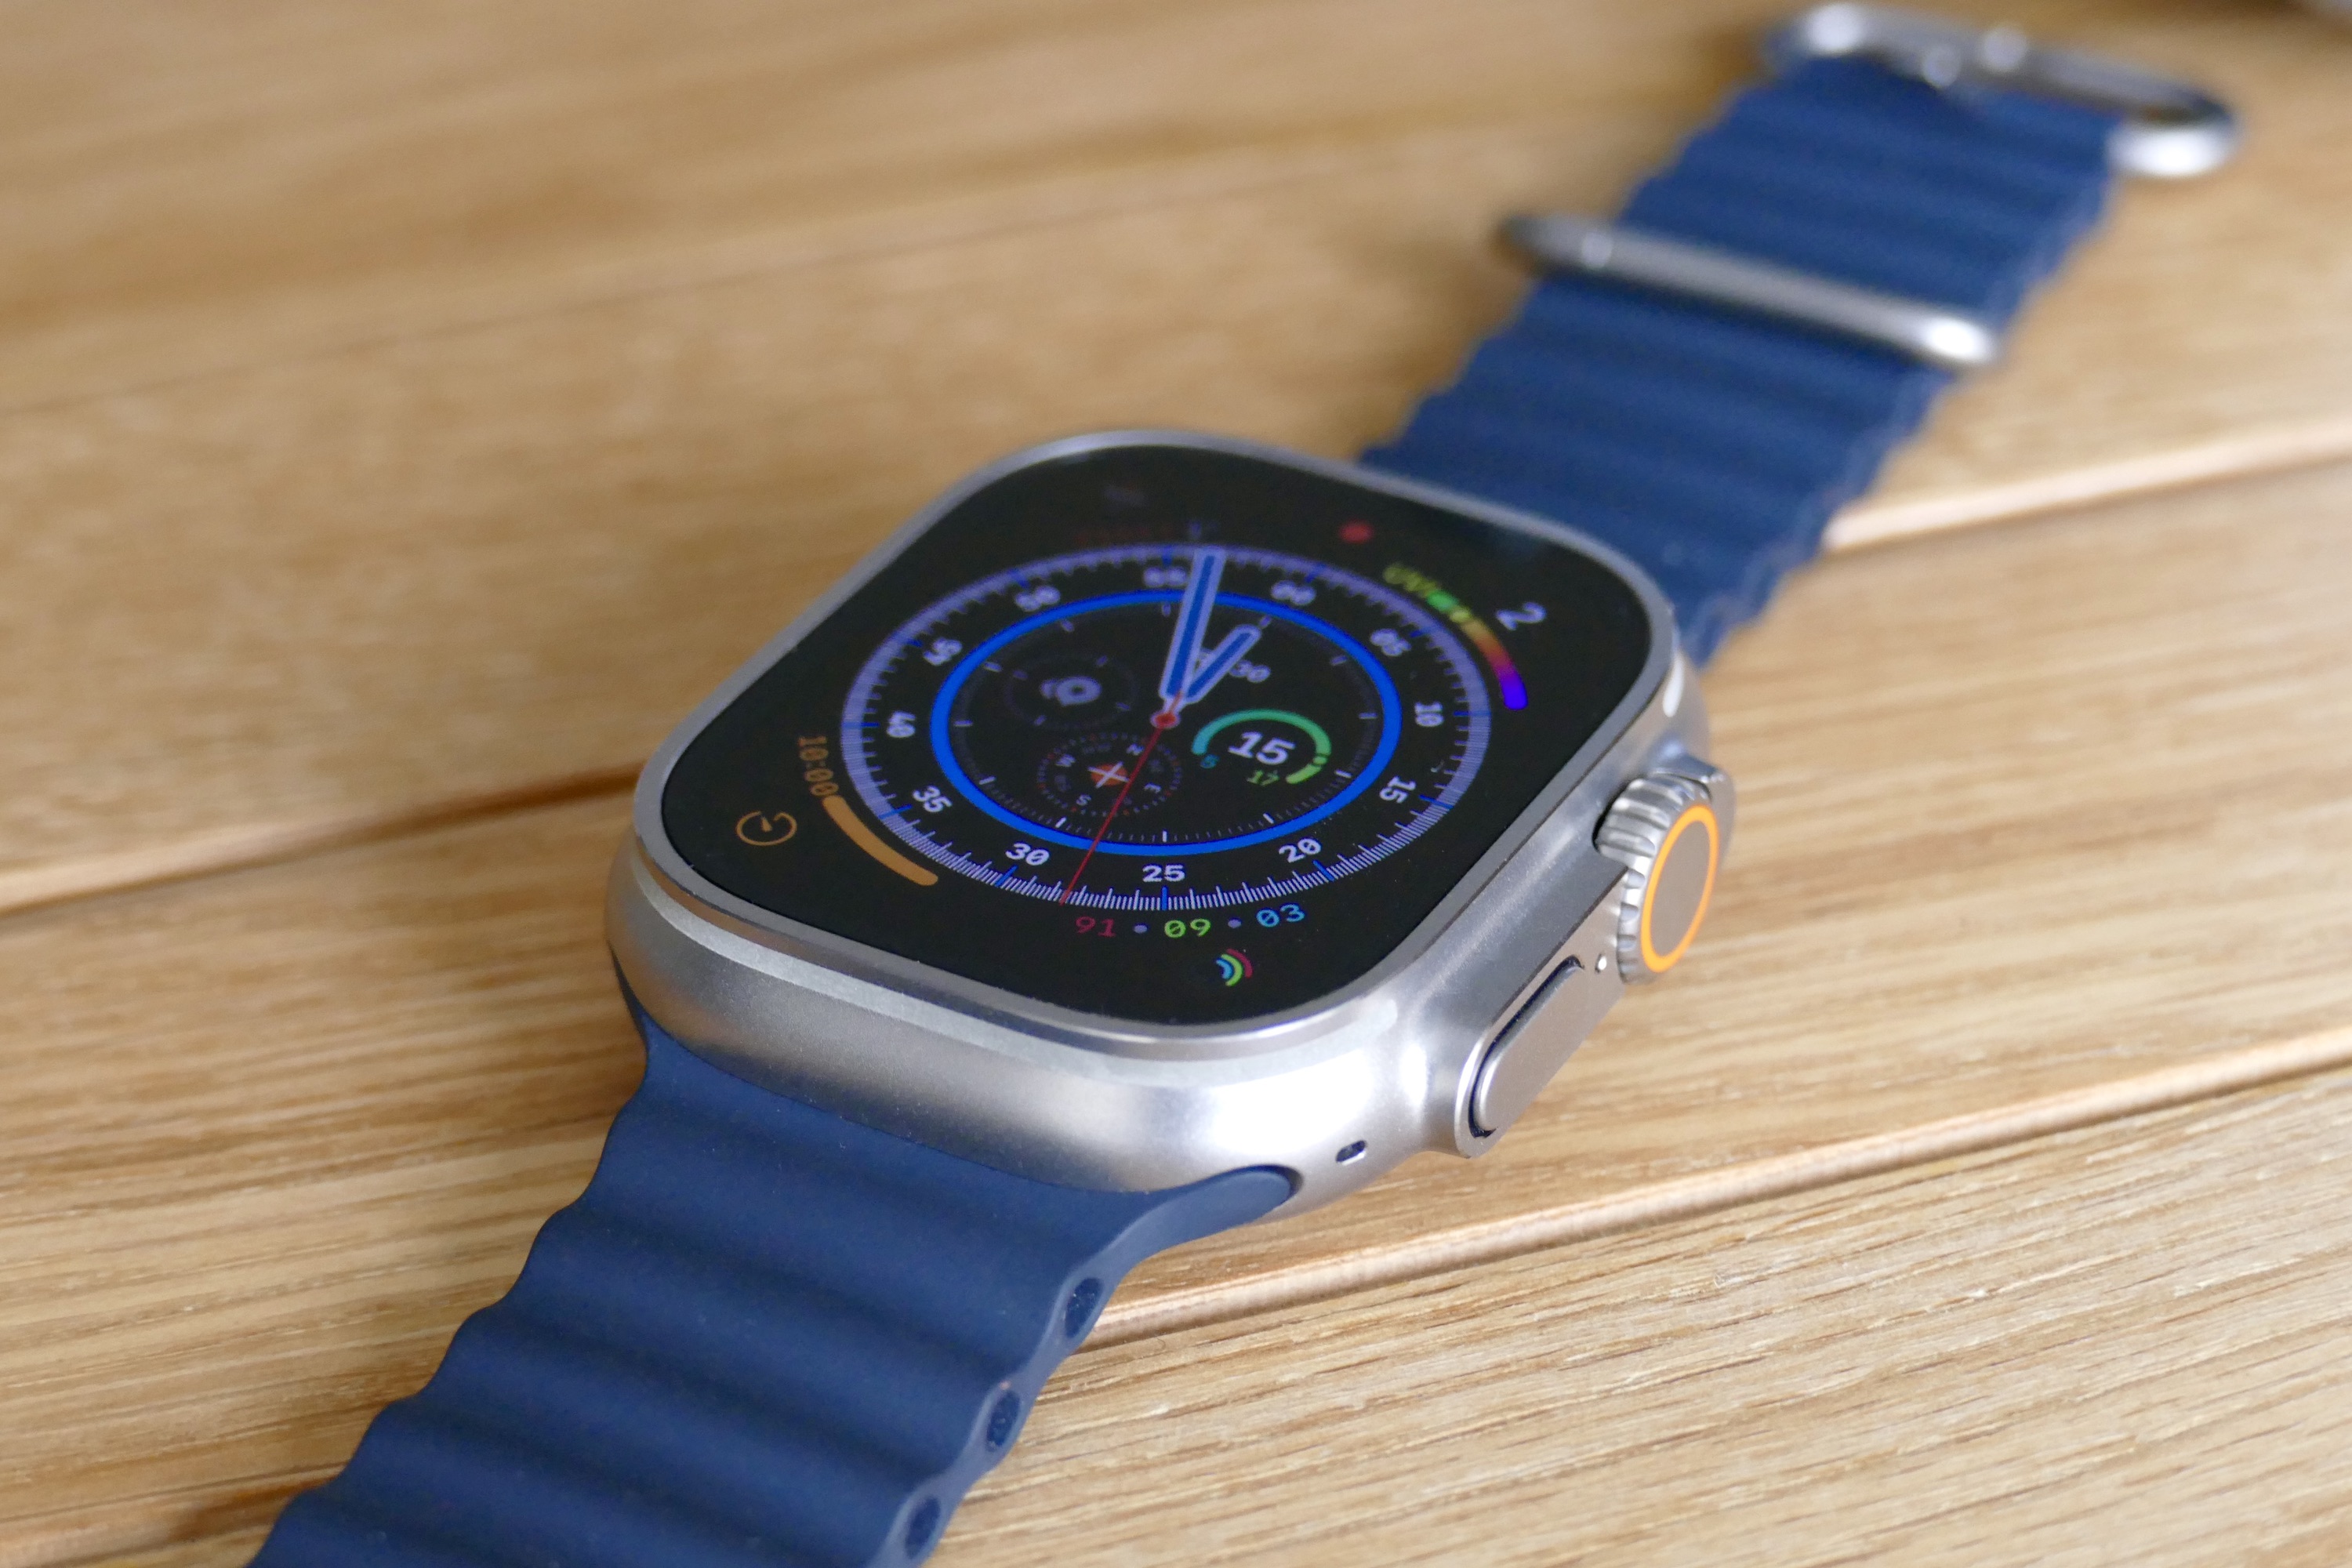 Gard Pro Ultra ⌚️, gard pro ultra watch review